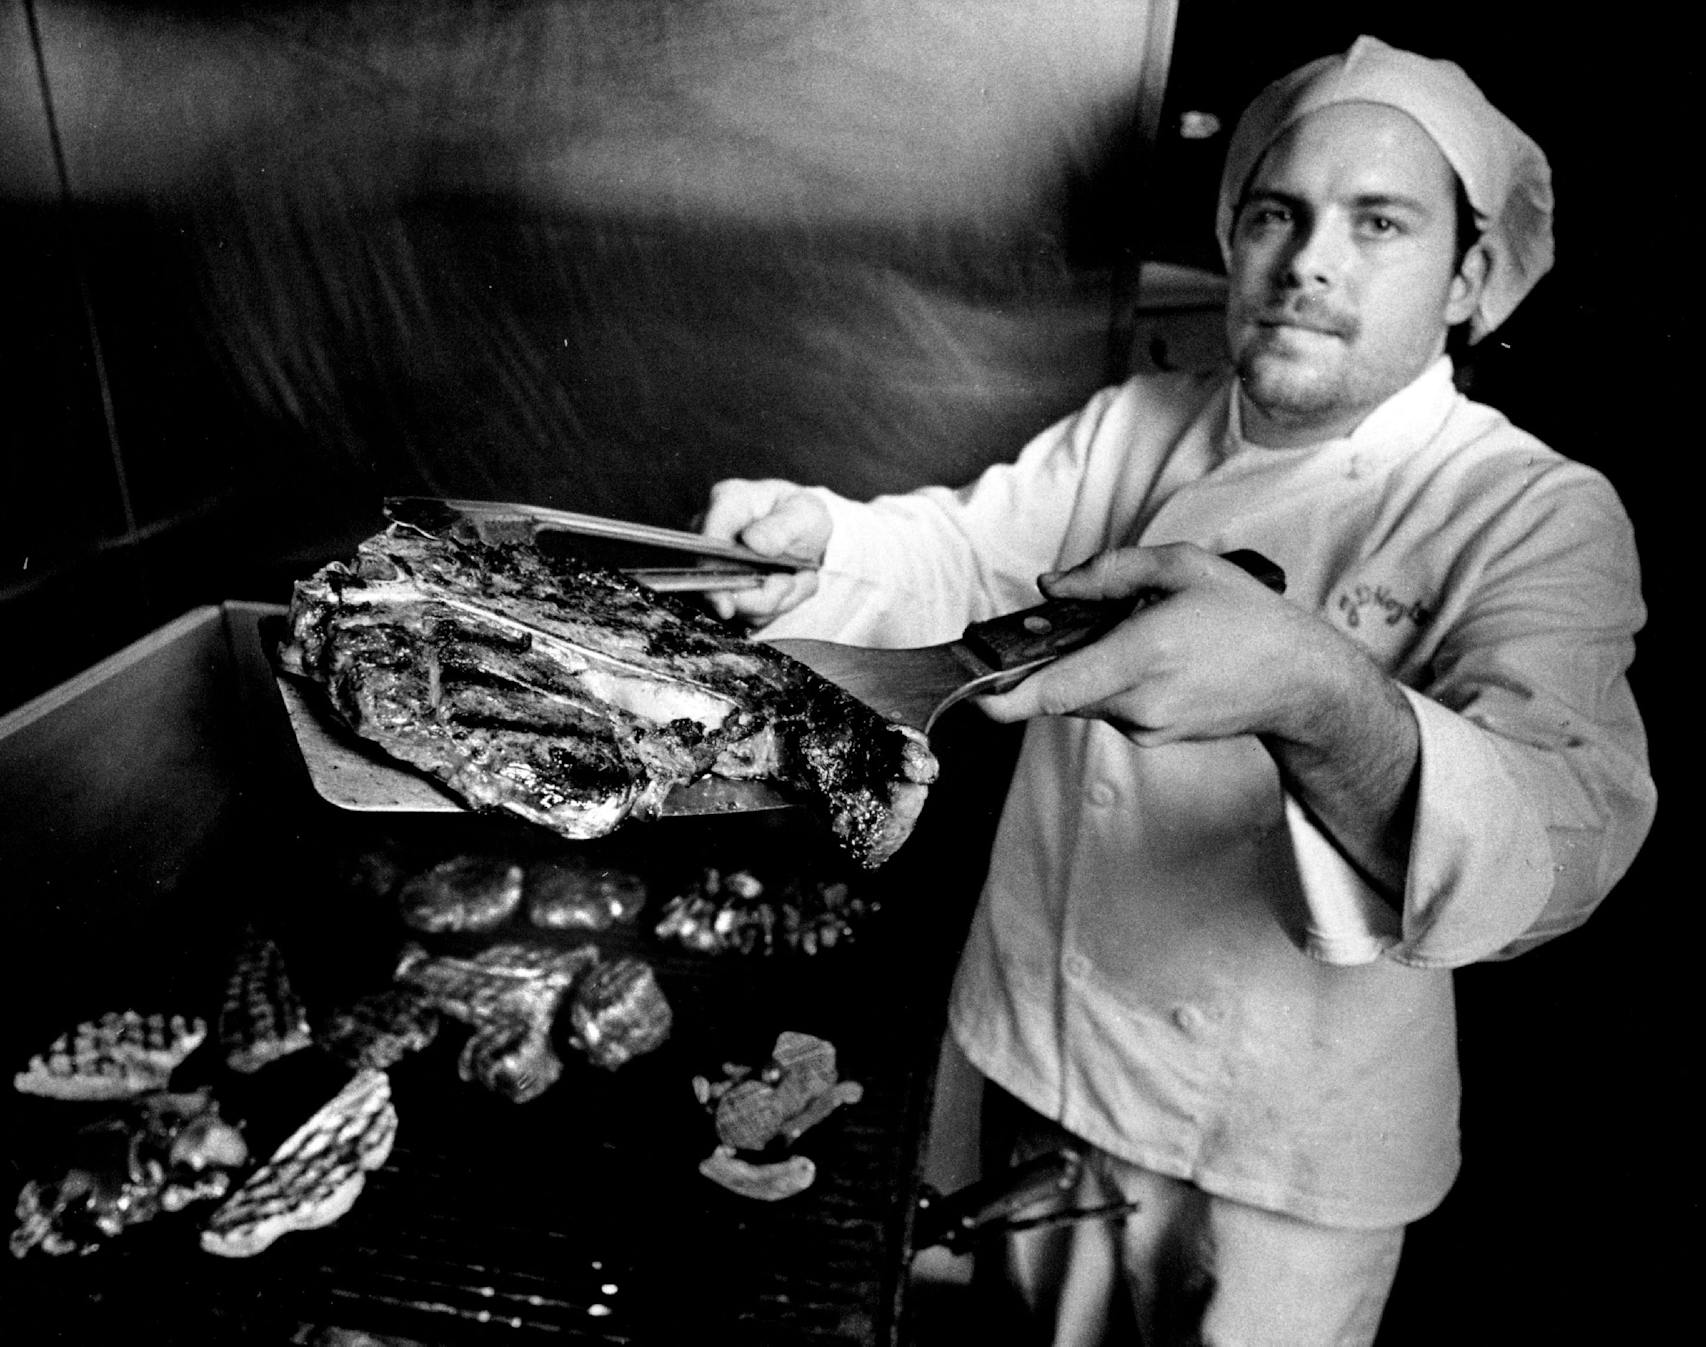 February 21, 1986 Chef Pat Montague grilled a porterhouse steak at J.D. Hoyt’s, a cozy little bar with a serious kitchen. February 18, 1986 Regene Radniecki, Minneapolis Star Tribune